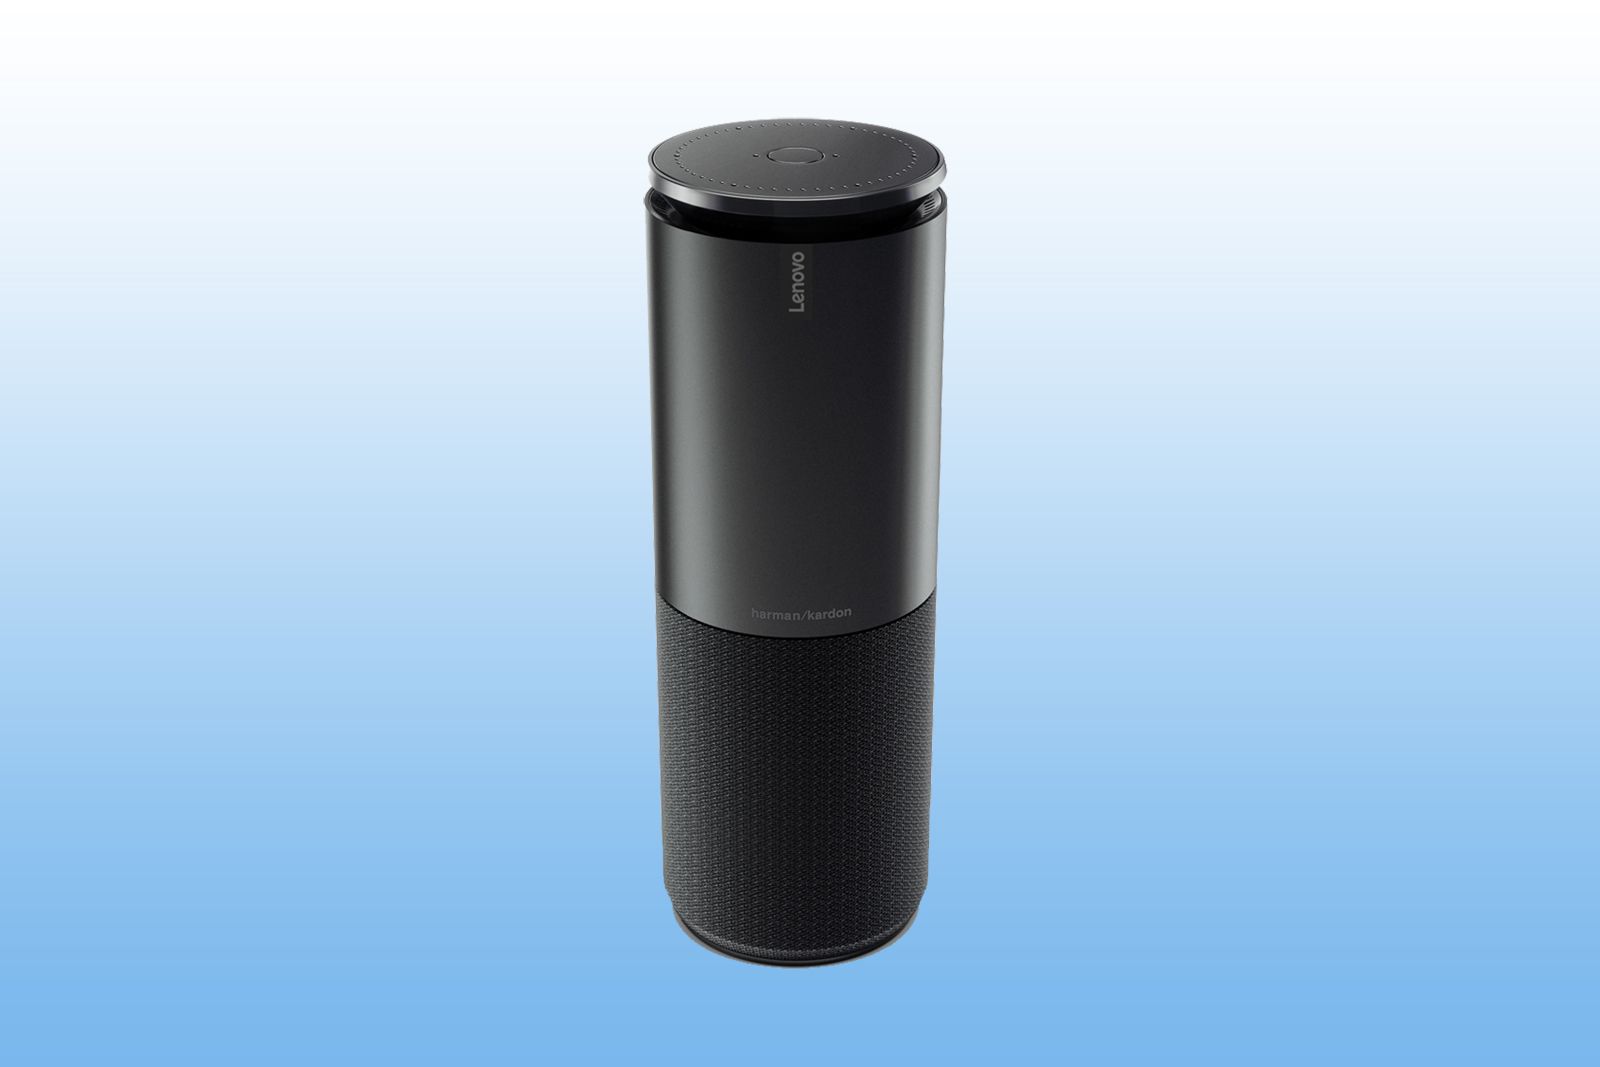 smart assistant is lenovo s new alexa powered speaker image 1